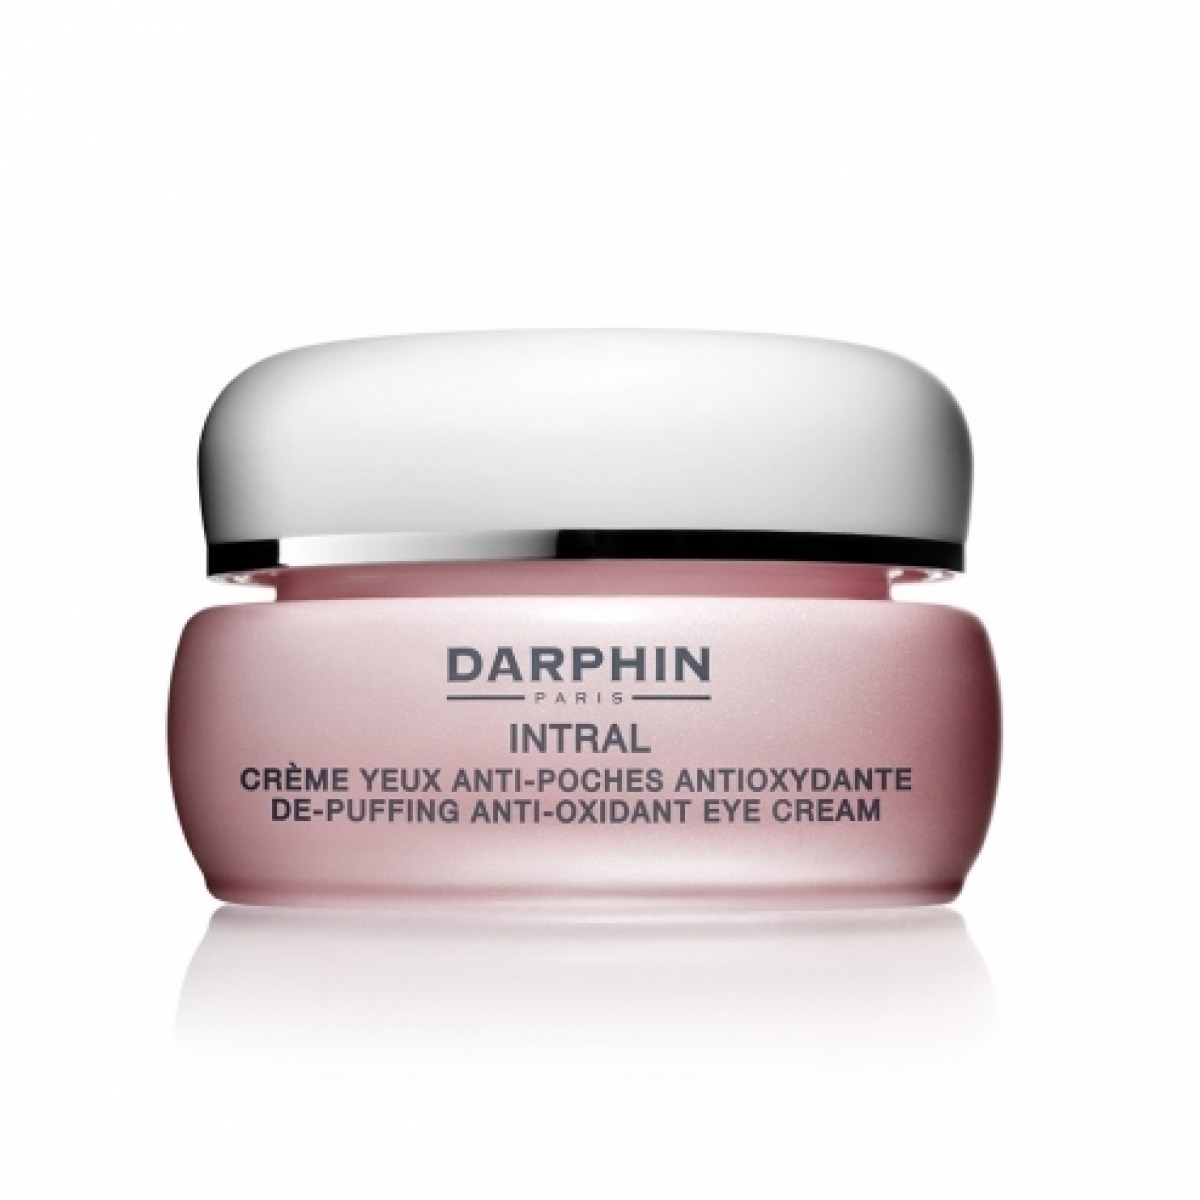 Darphin Intral Creme Yeux Anti Poches Antioxydante 15ml